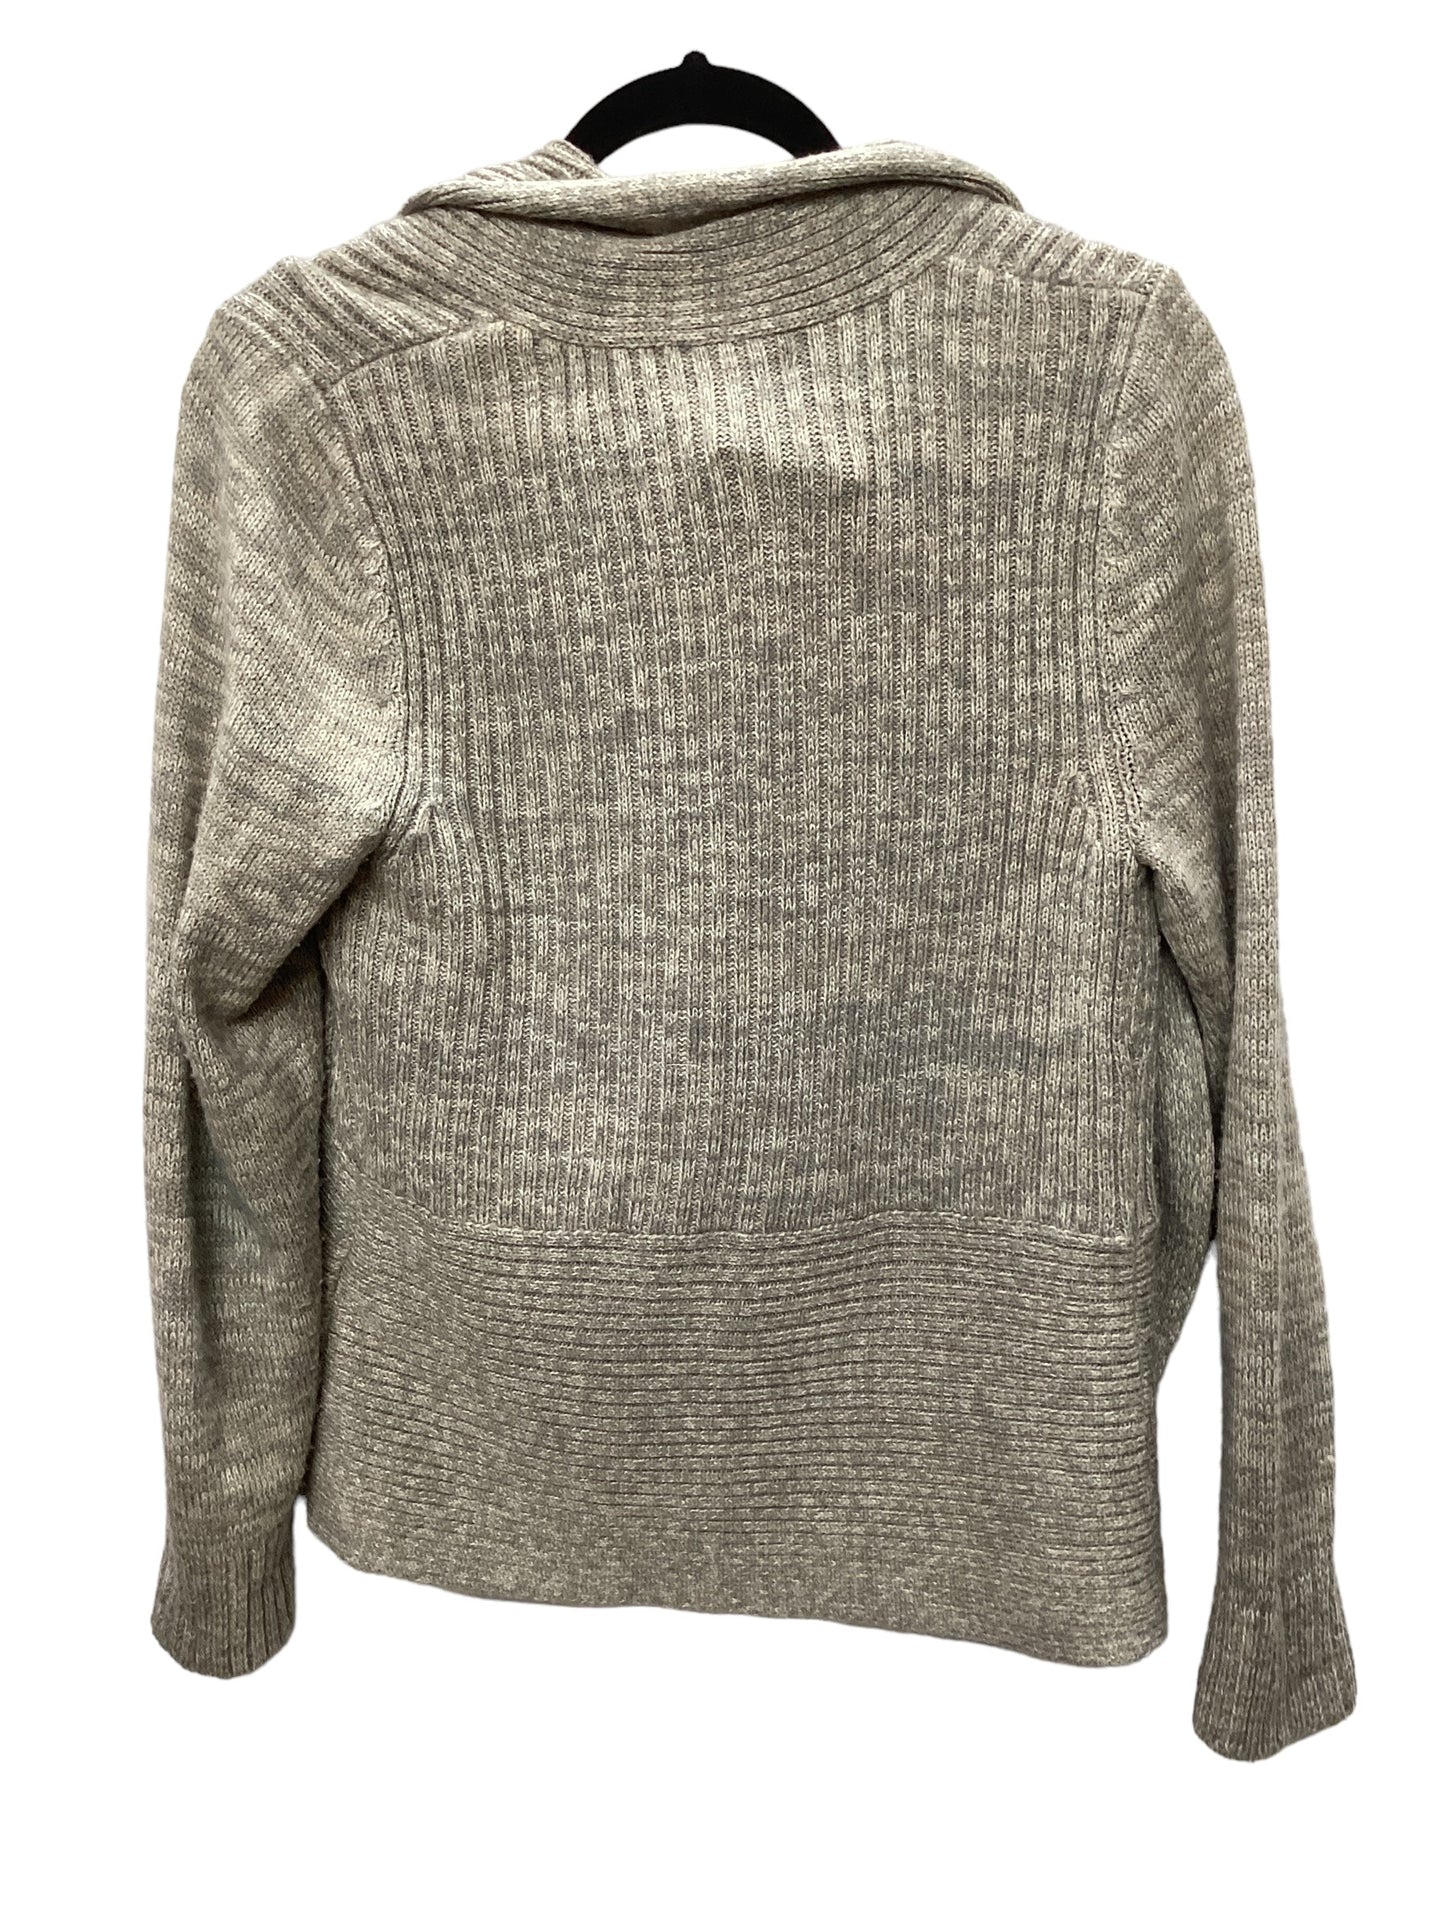 Sweater Cardigan By Apt 9  Size: M